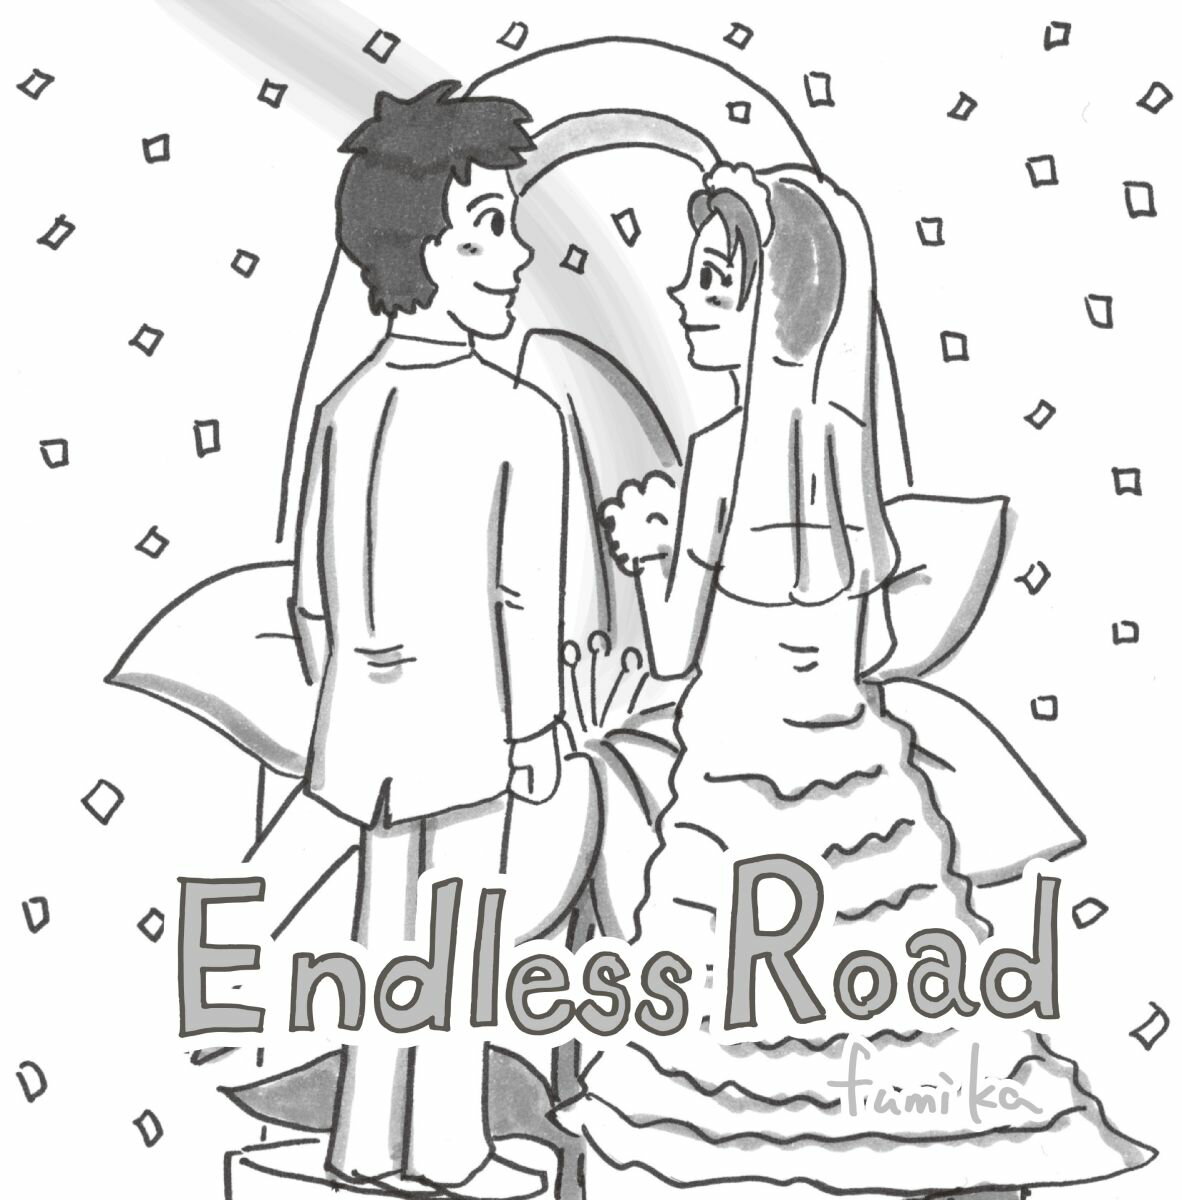 Endless Road [ fumika ]